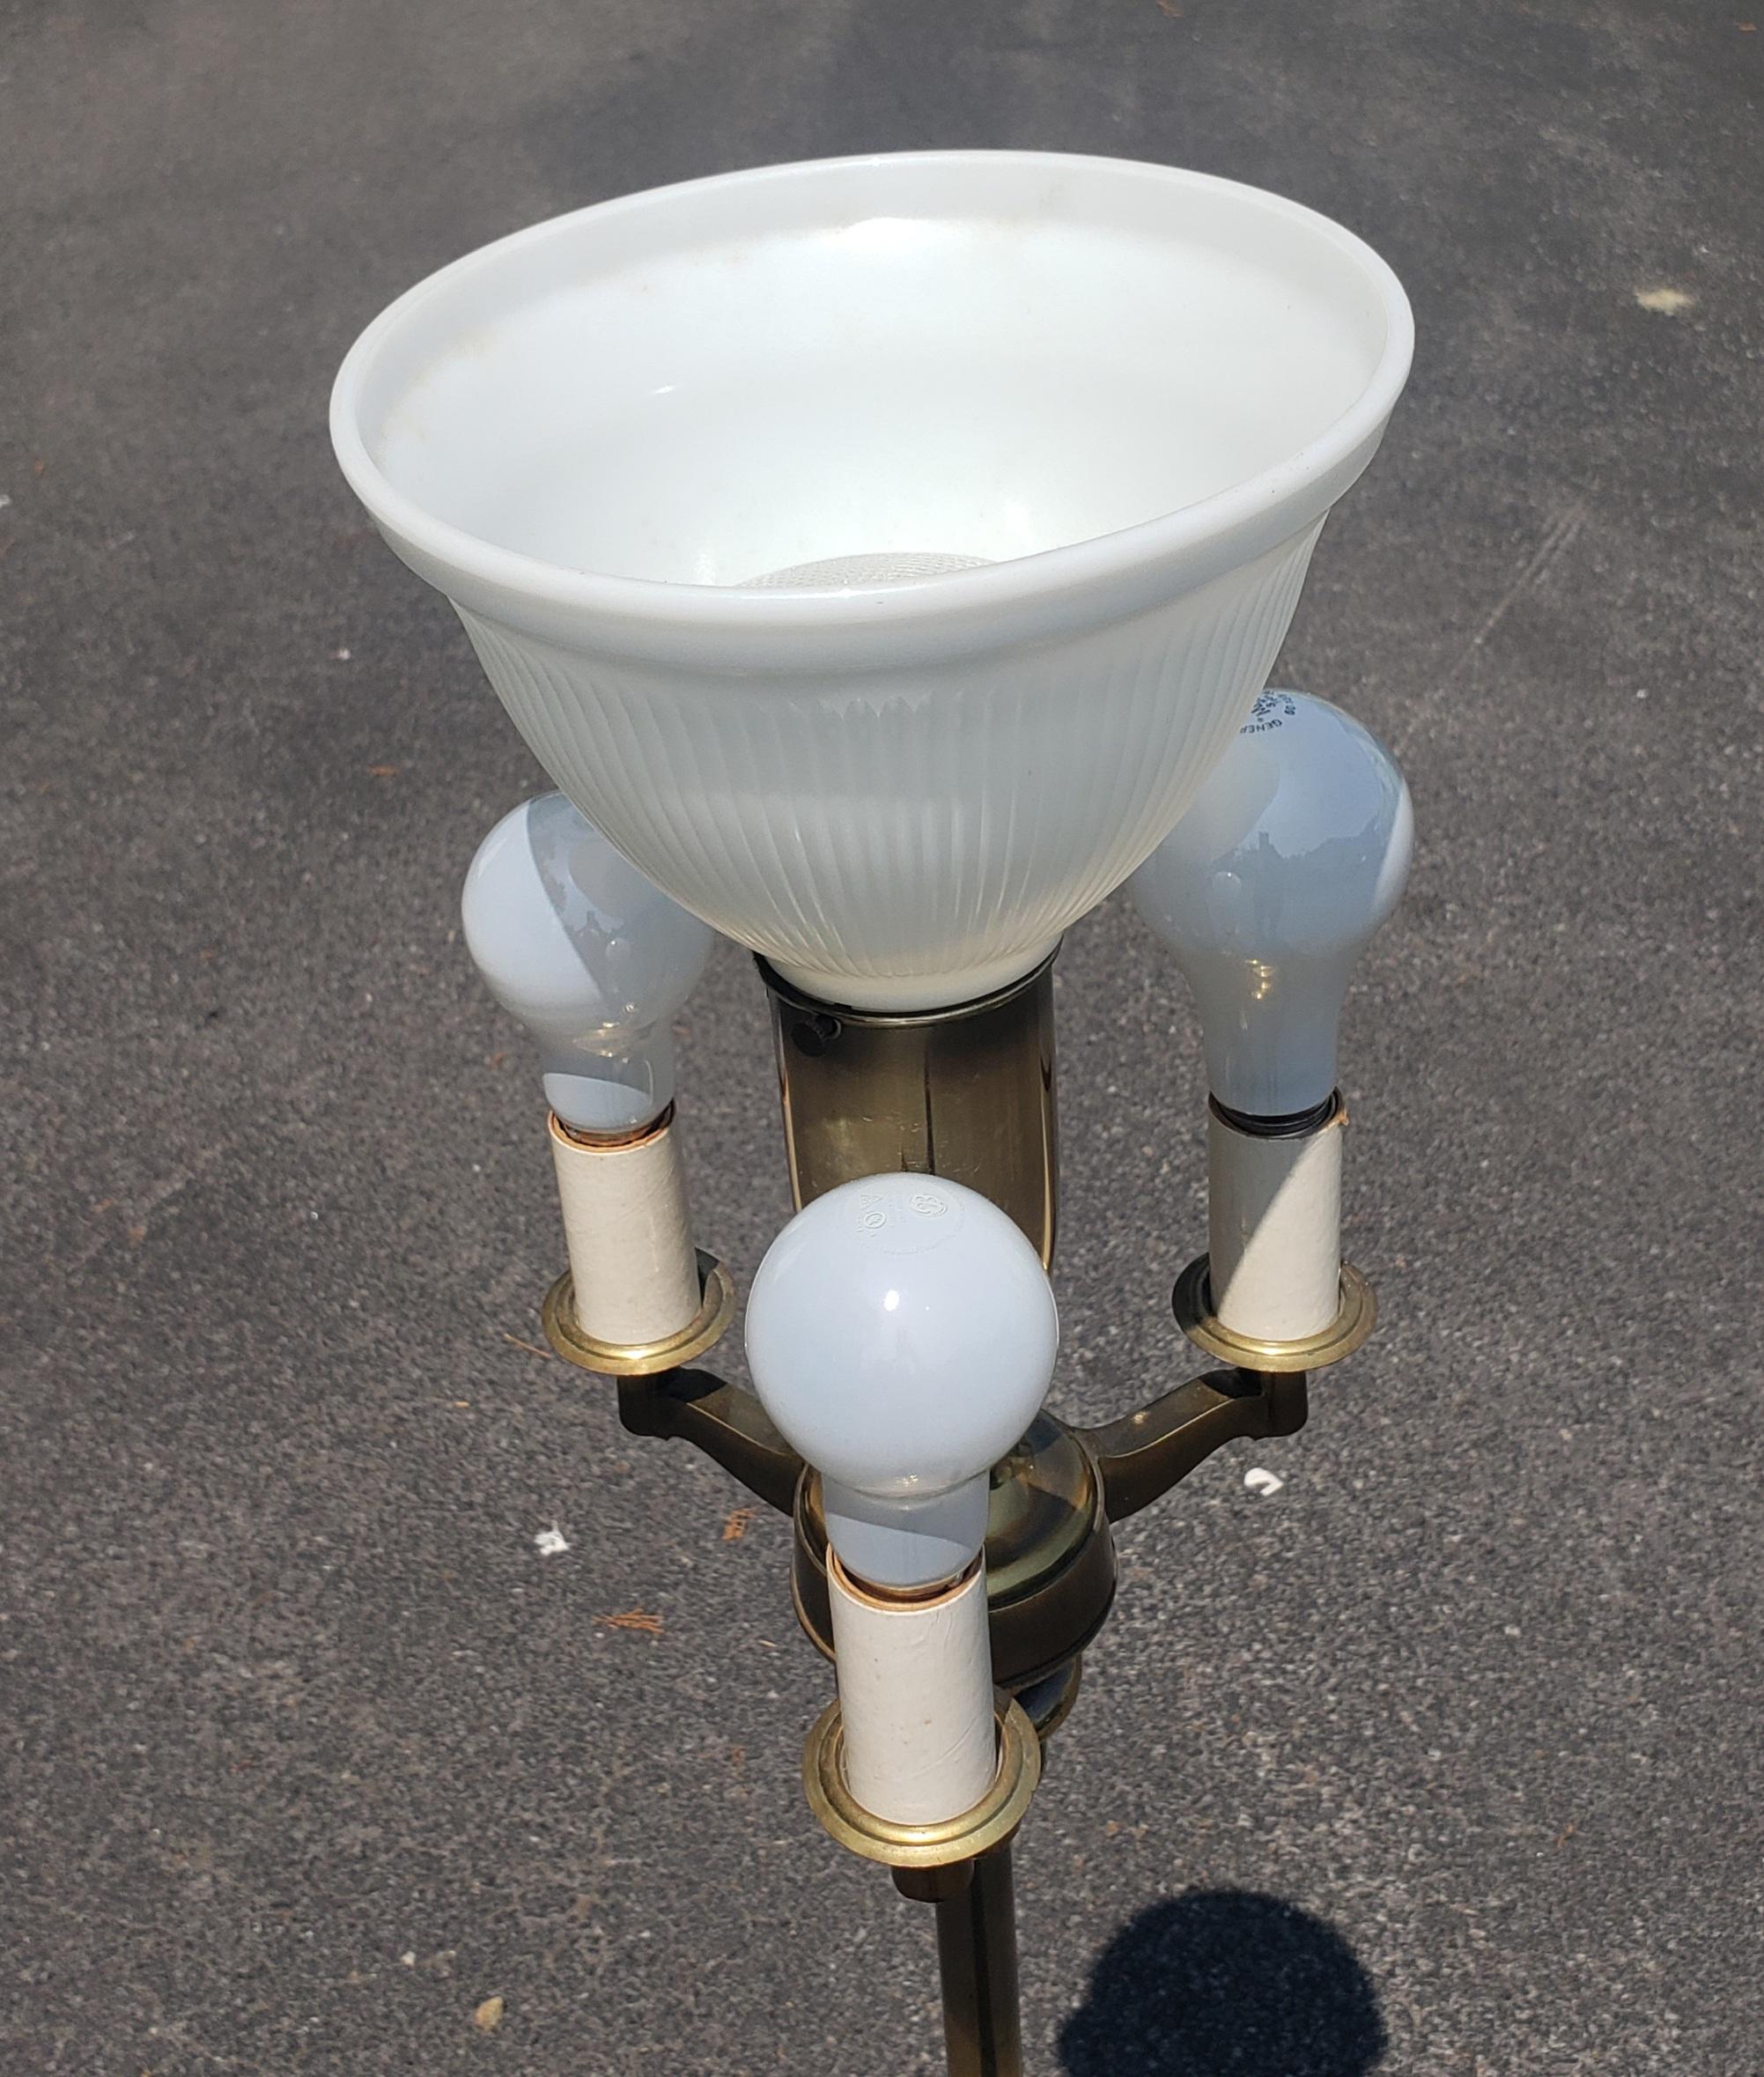 Midcentury Stiffel Brass 4-way Torchiere Floor Lamp with milk glass shade.
Measures 11